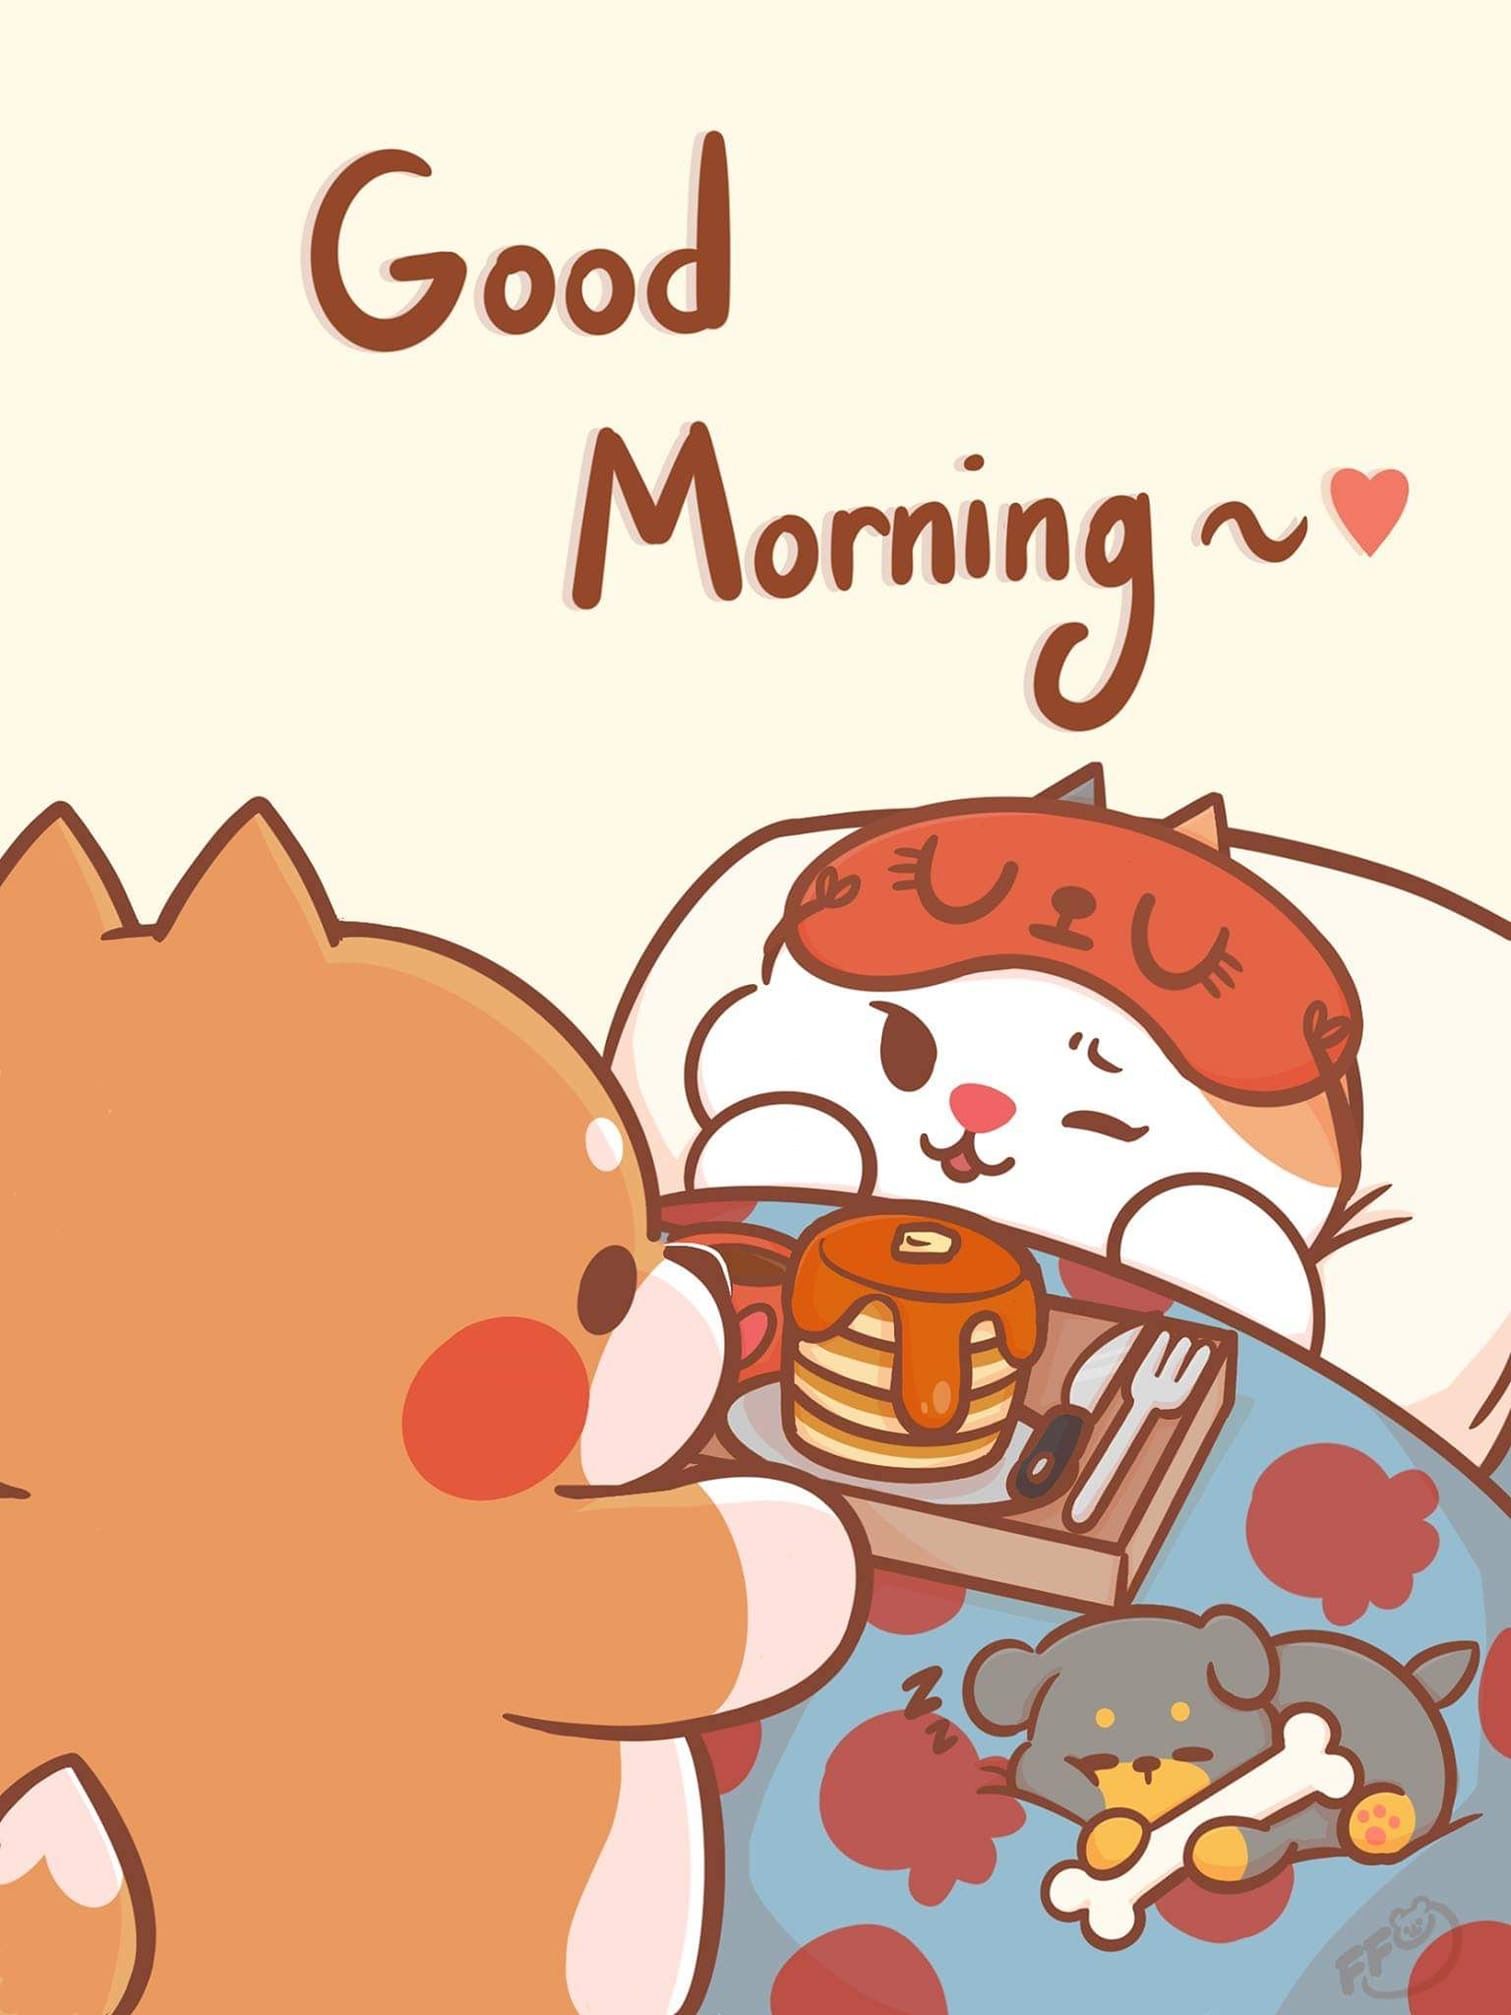 Good Morning Cute Cartoon Images